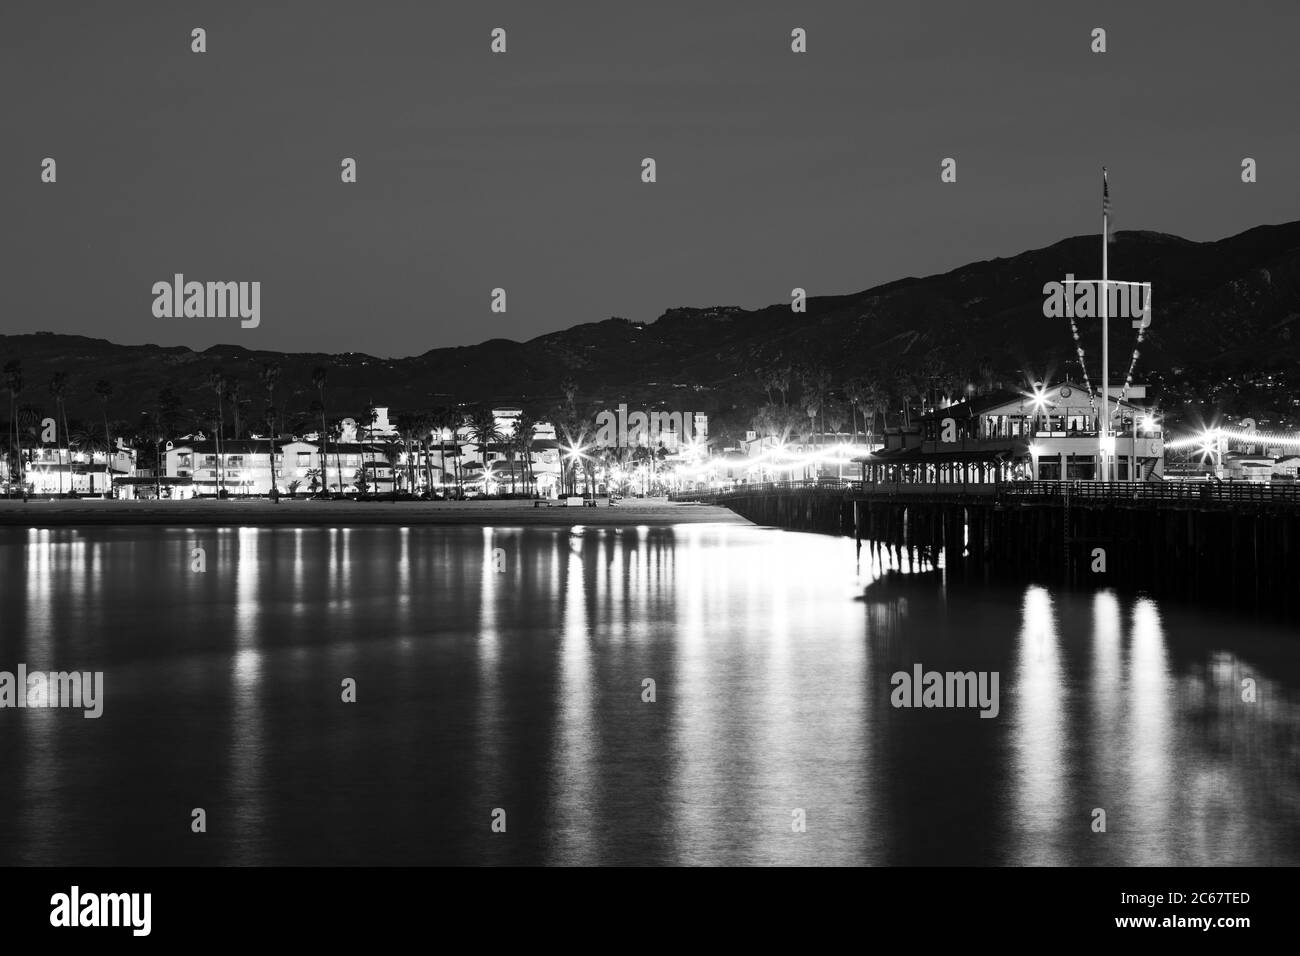 Illuminated Santa Barbara Pier at night, California, USA Stock Photo